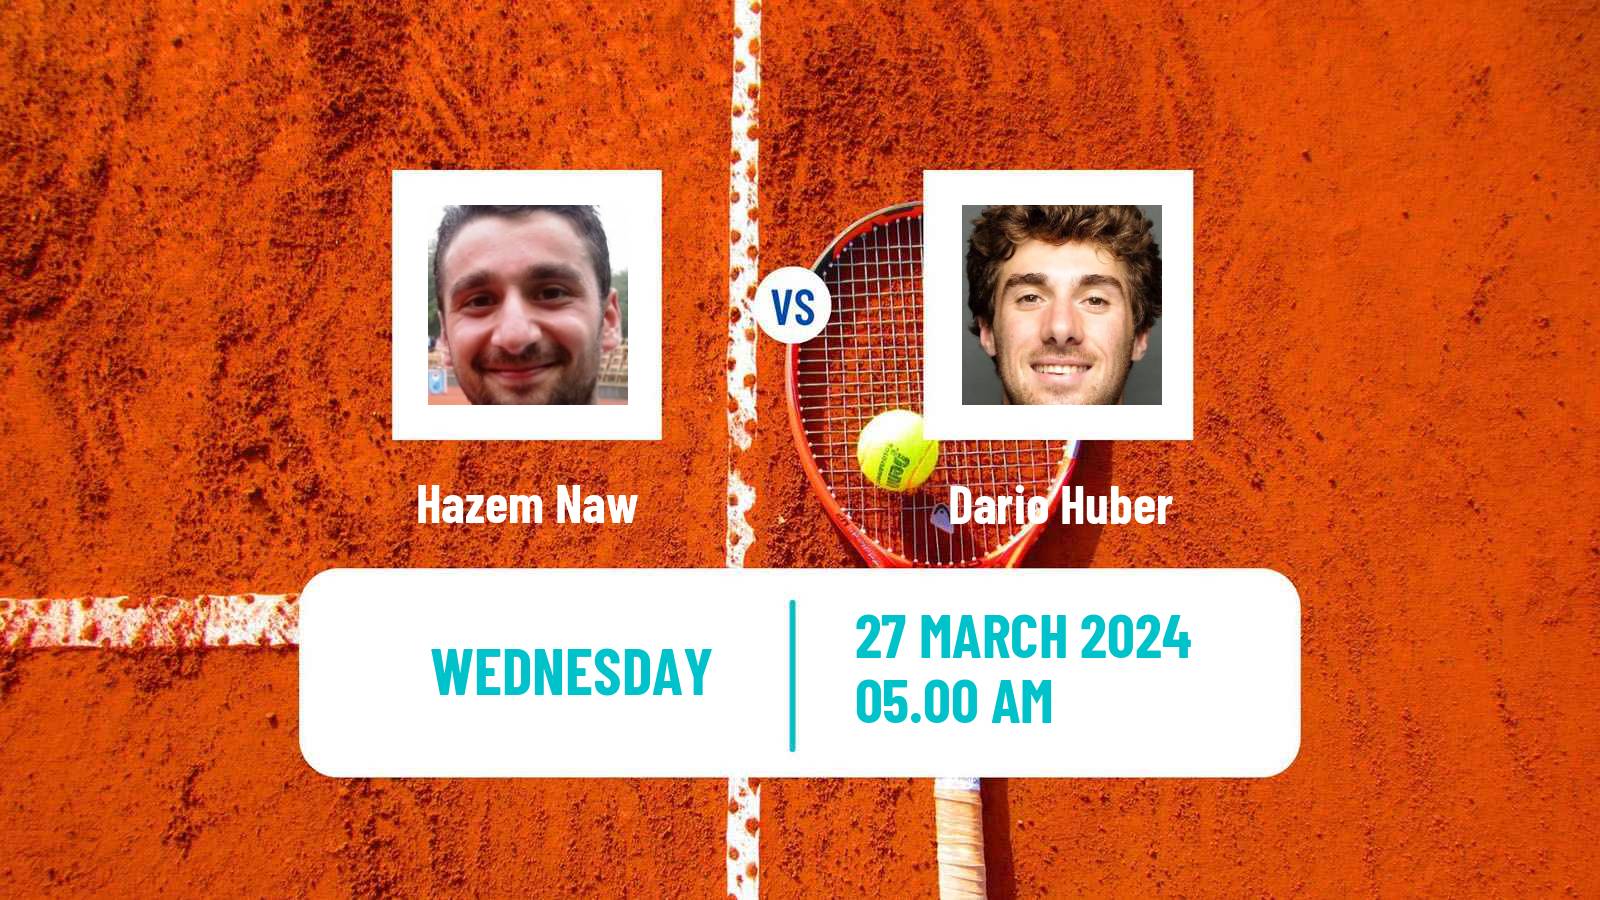 Tennis ITF M25 Saint Dizier Men Hazem Naw - Dario Huber